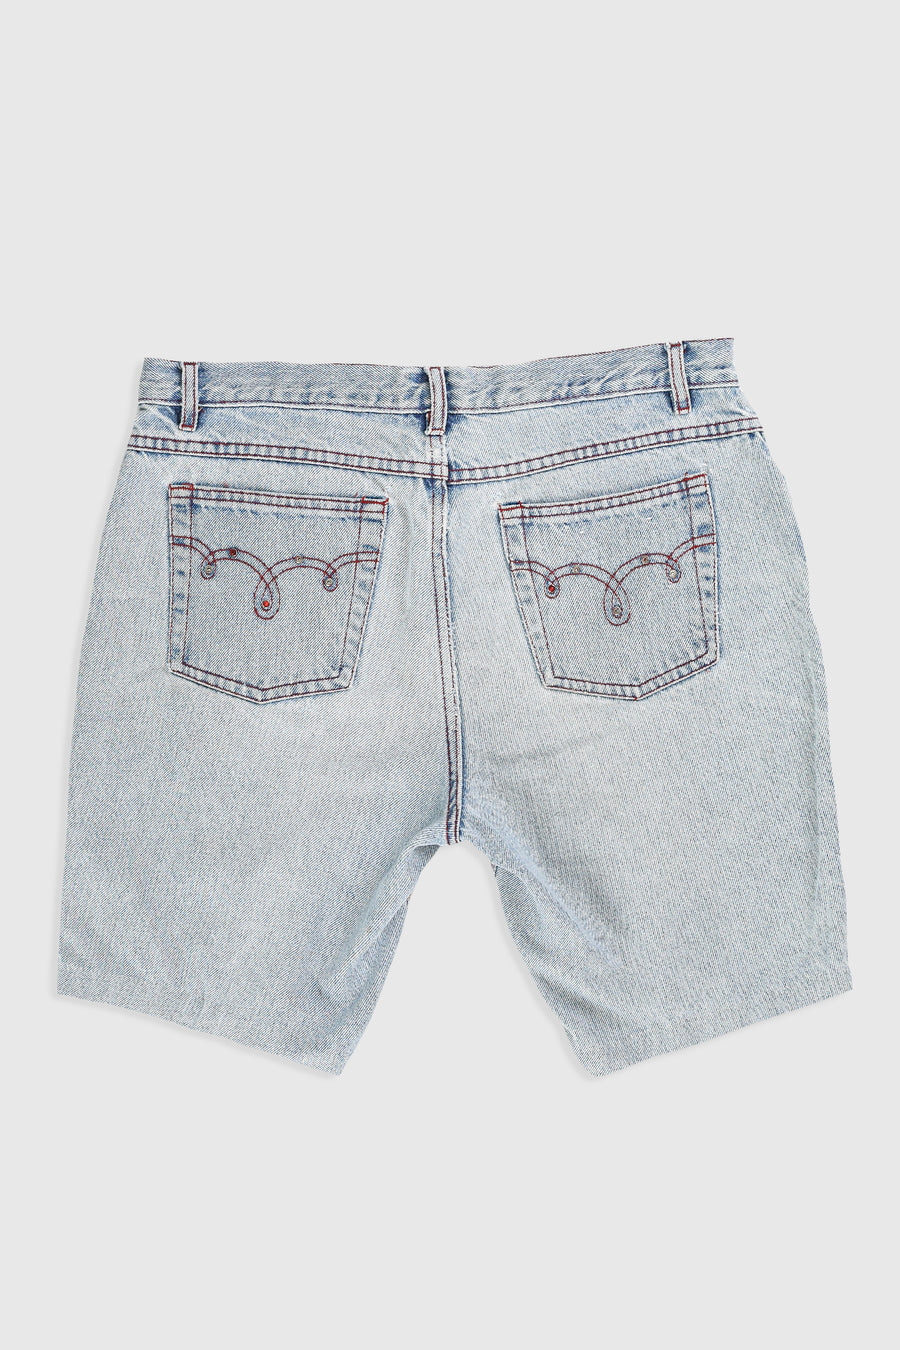 Vintage No Boundaries Denim Shorts